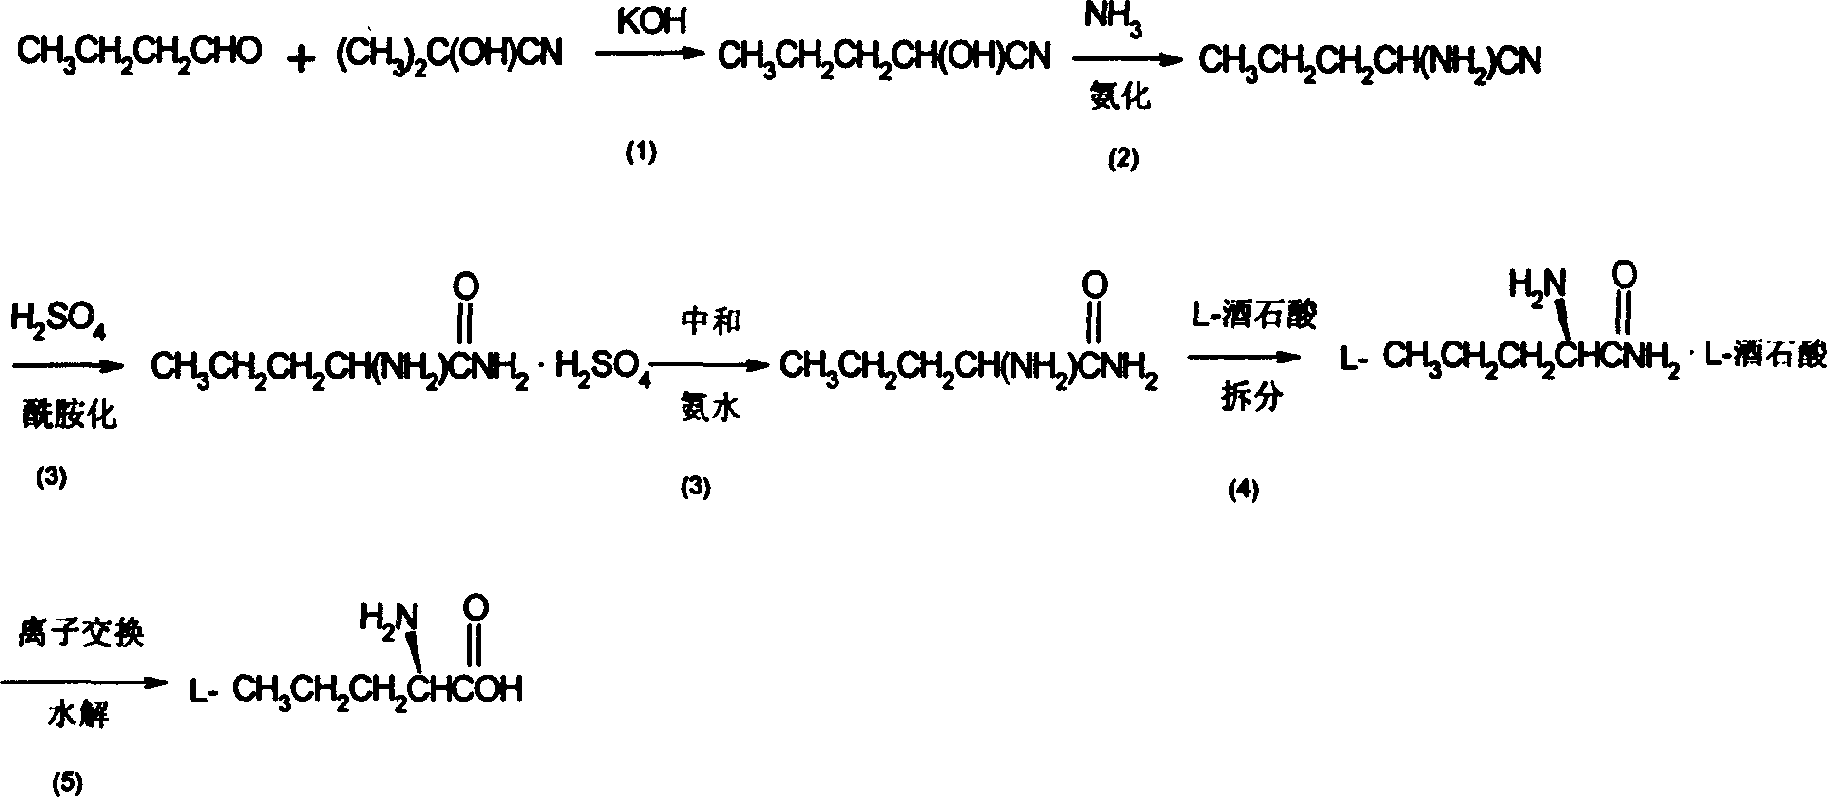 Synthesis method of L-n-valaine